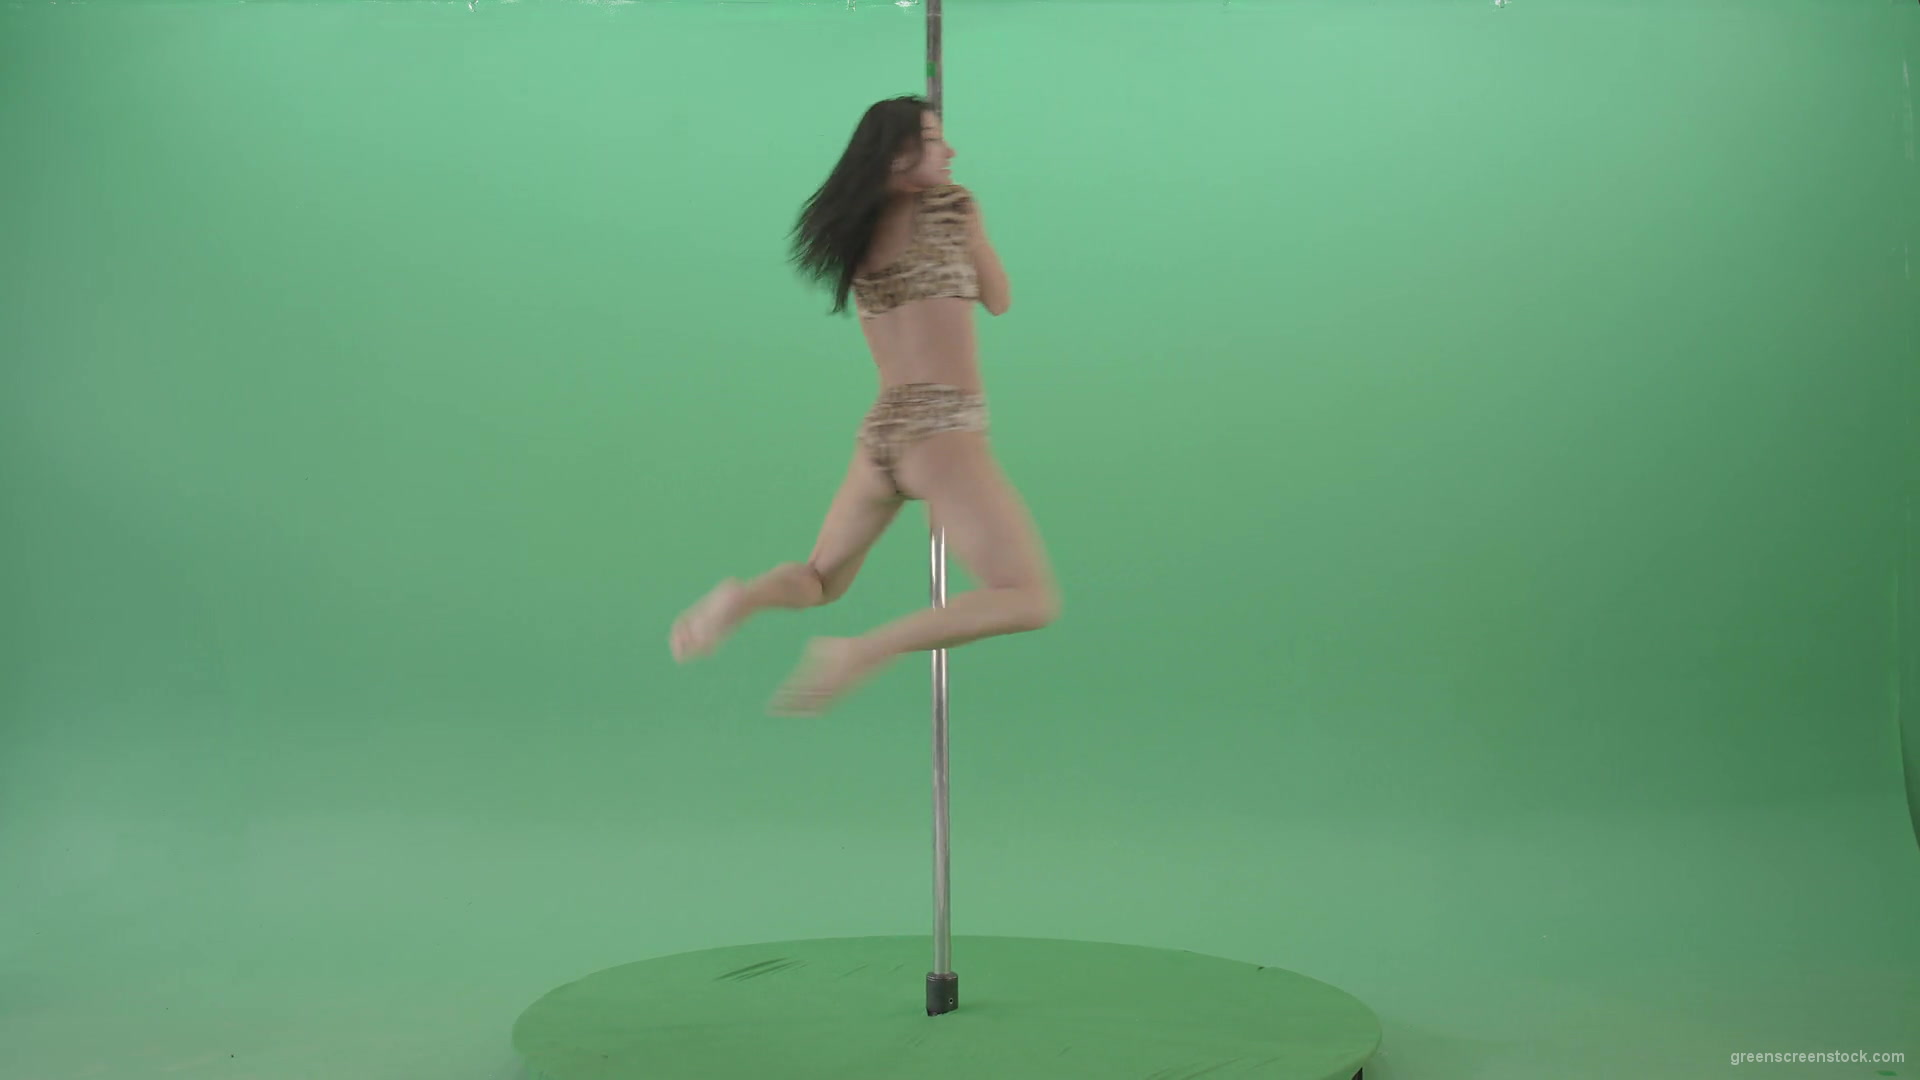 Slim-woman-spinning-in-simple-pose-dancing-pole-dance-in-animal-jaguar-skin-underwear-on-green-screen-4K-Video-Footage-1920_005 Green Screen Stock